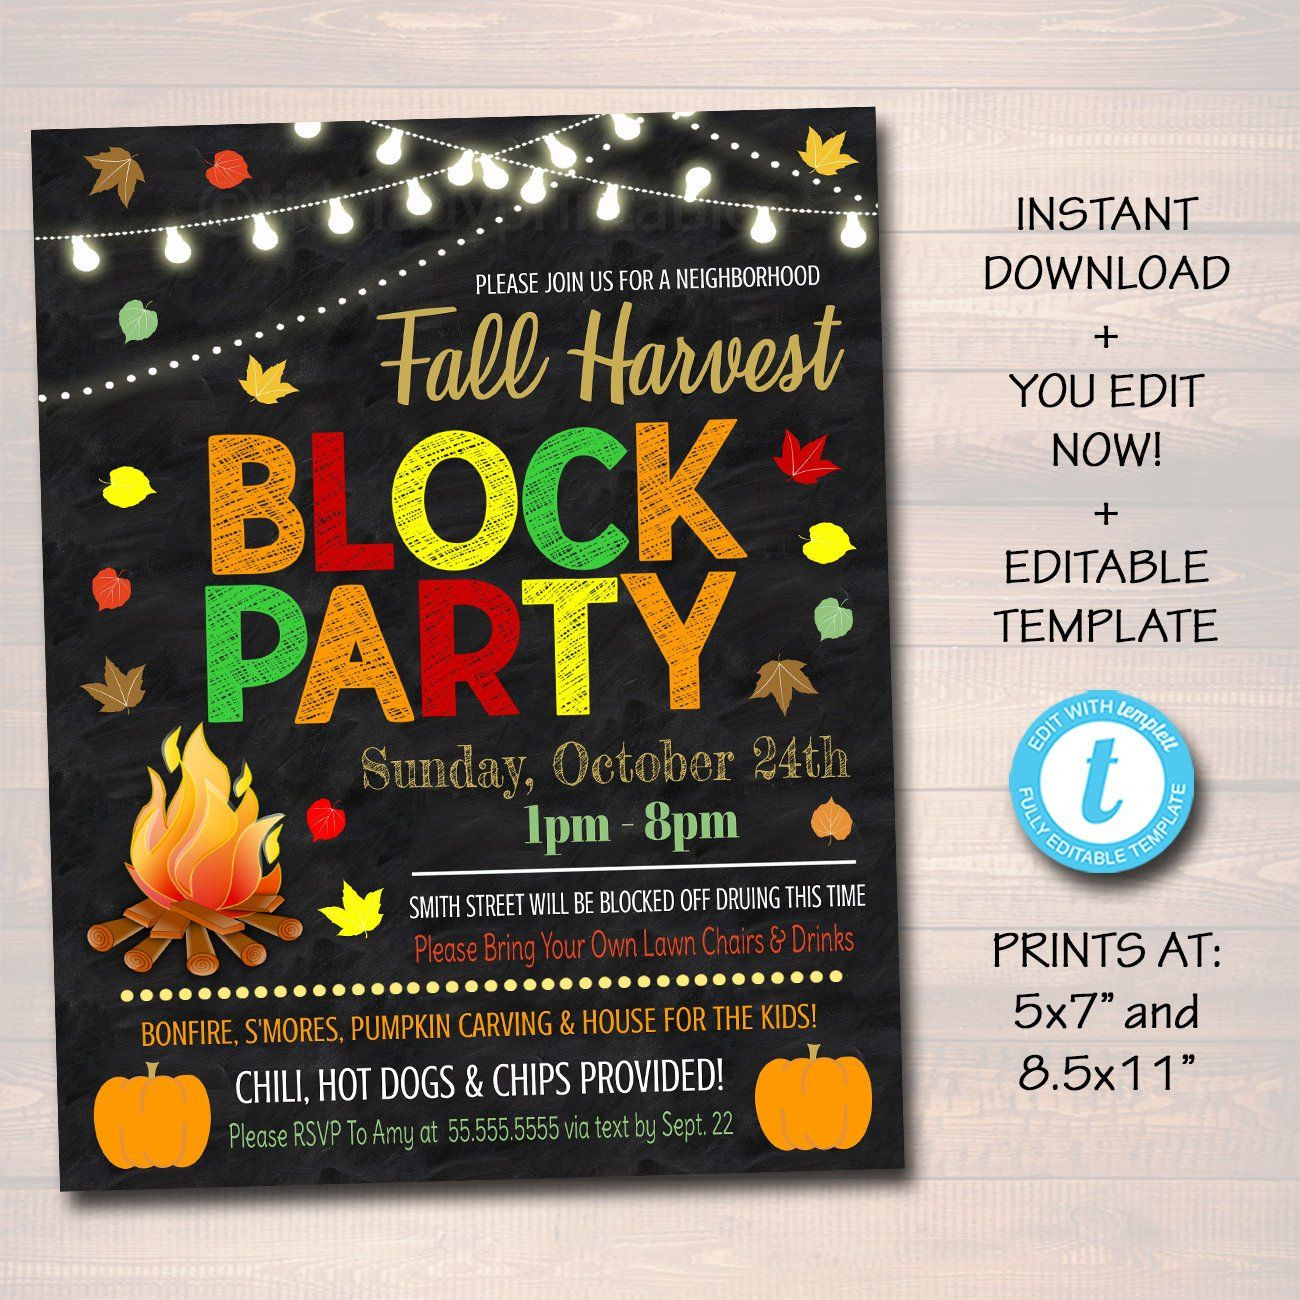 Neighborhood Halloween Block Party Ideas
 Fall Block Party Festival Harvest Invite Flyer Printable